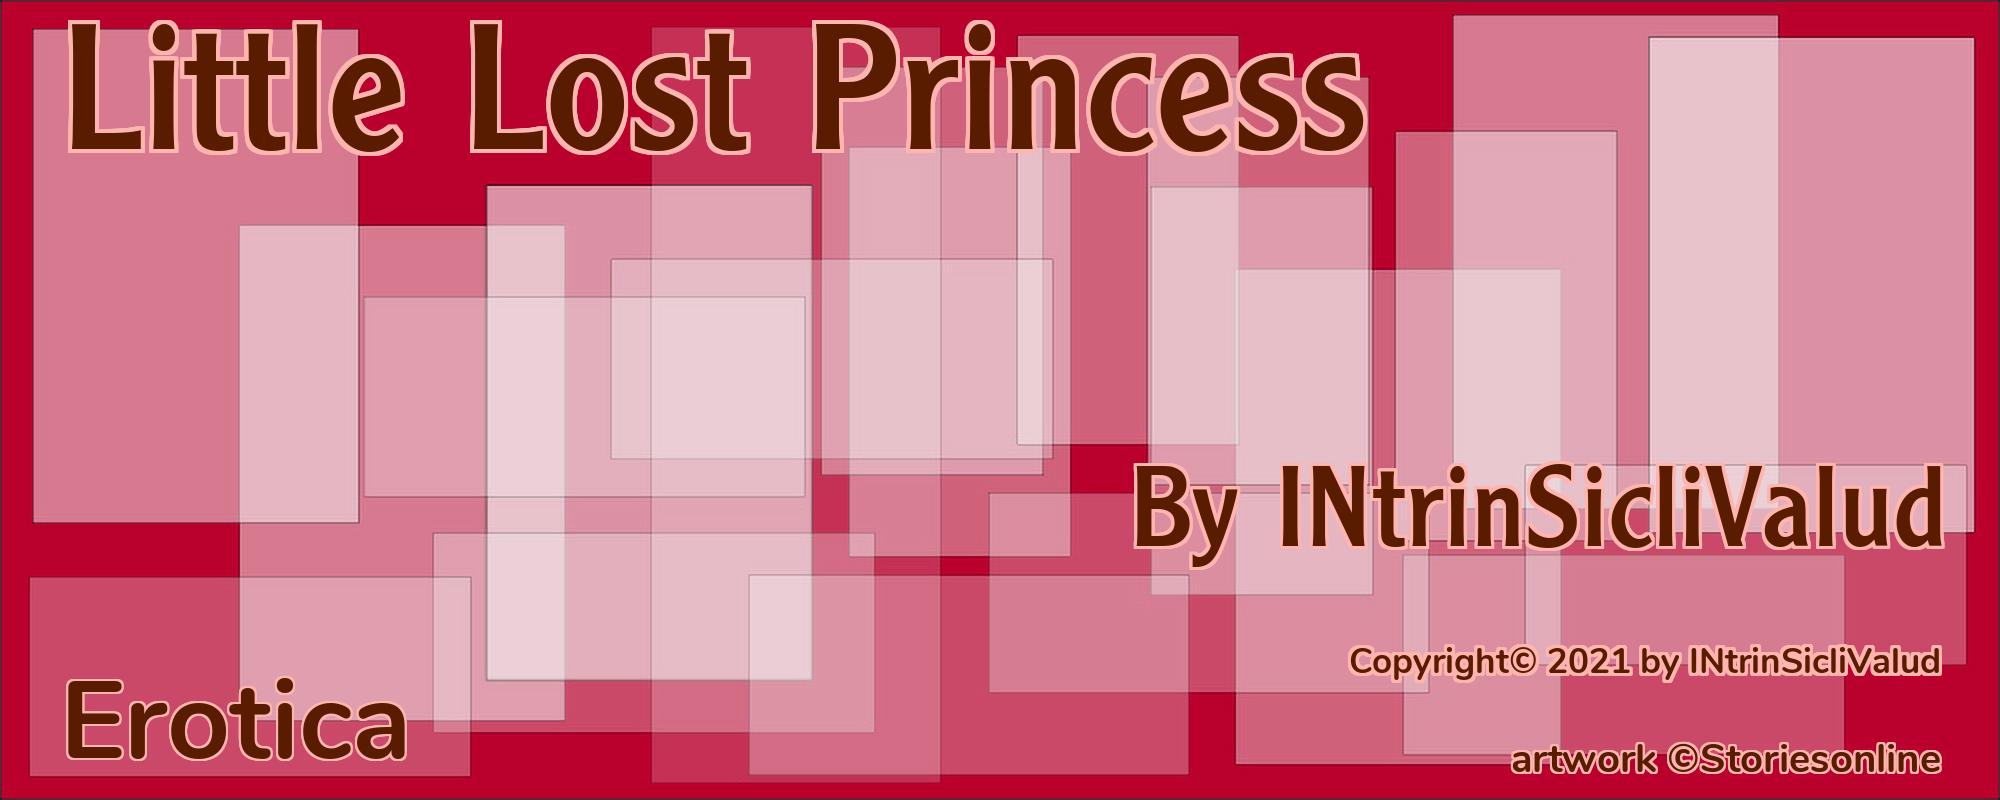 Little Lost Princess - Cover